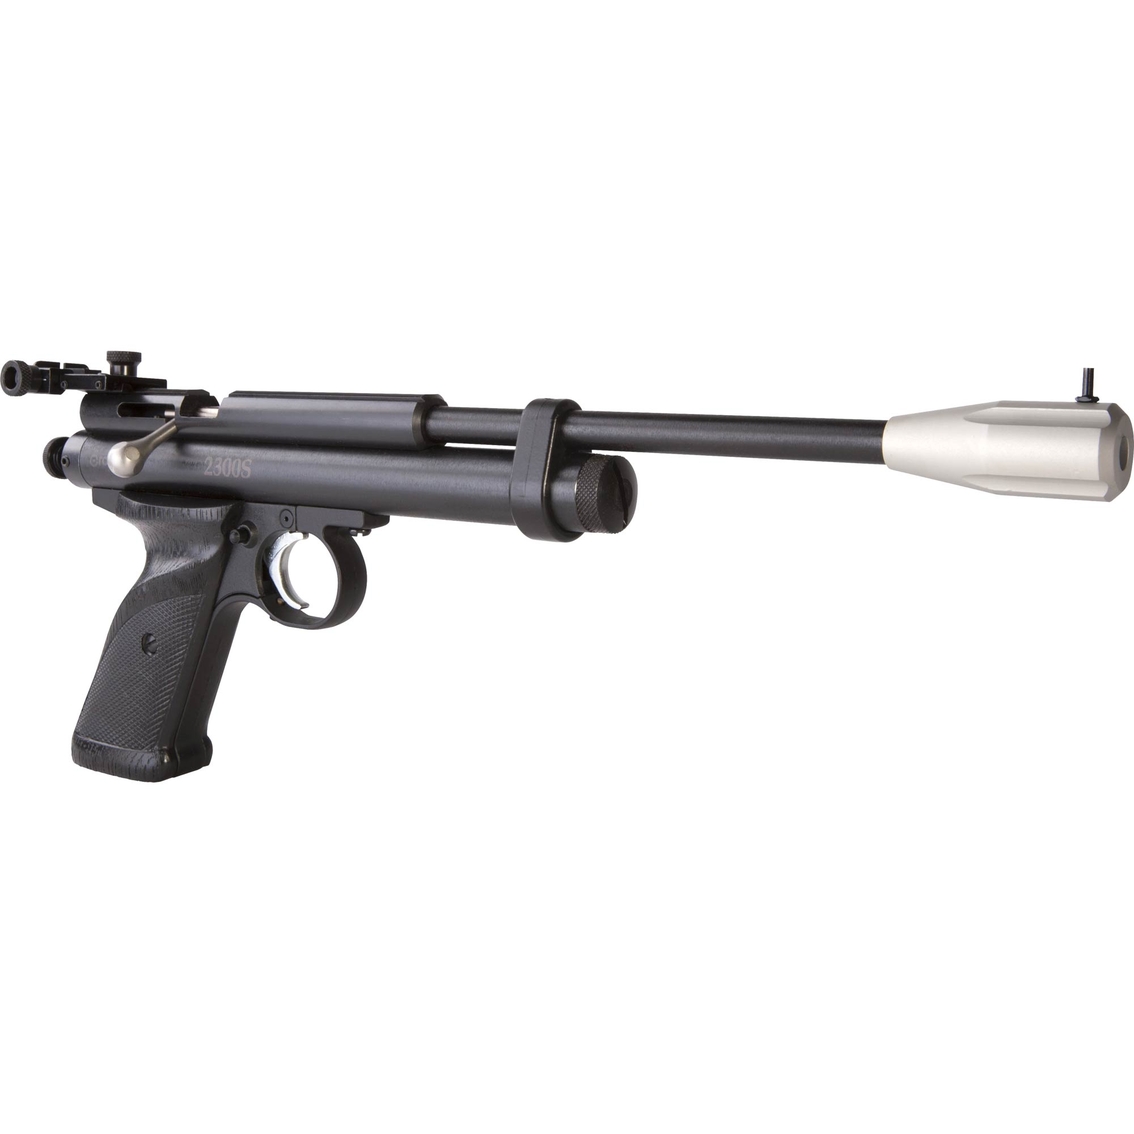 Crosman 2300S Silhouette Pistol - Image 1 of 2